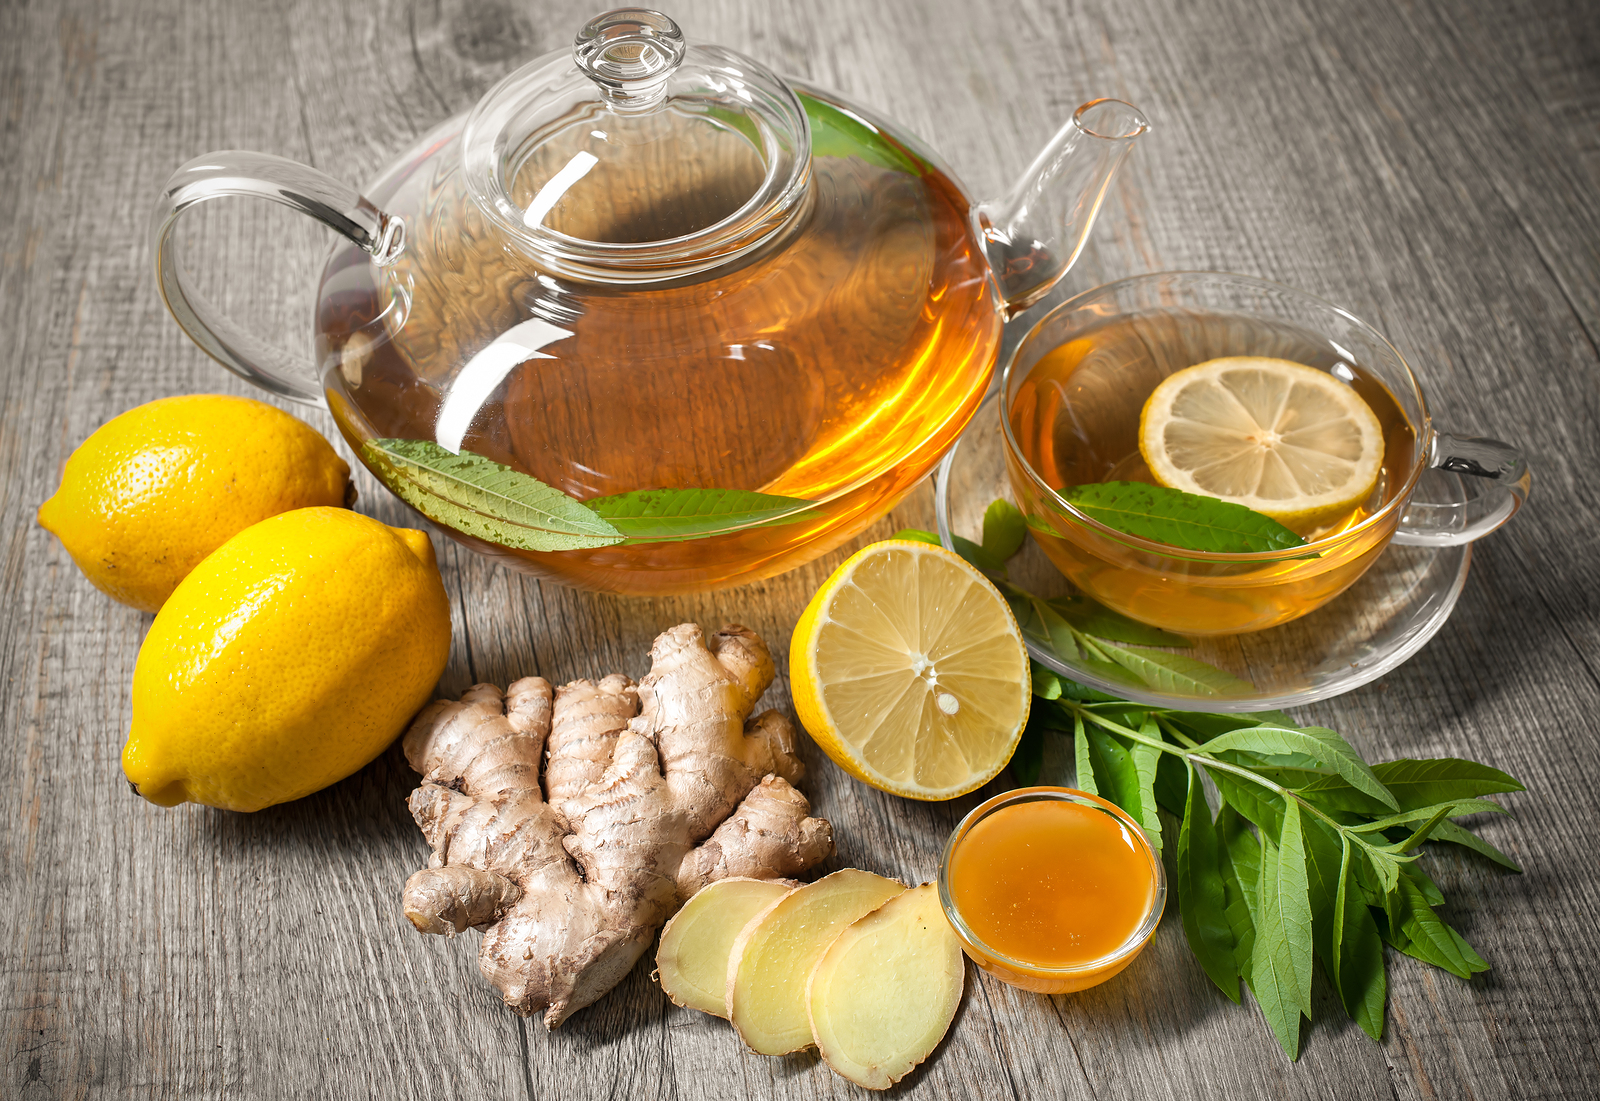 Lemon, ginger and cloves work as natural and safe anti-coronavirus